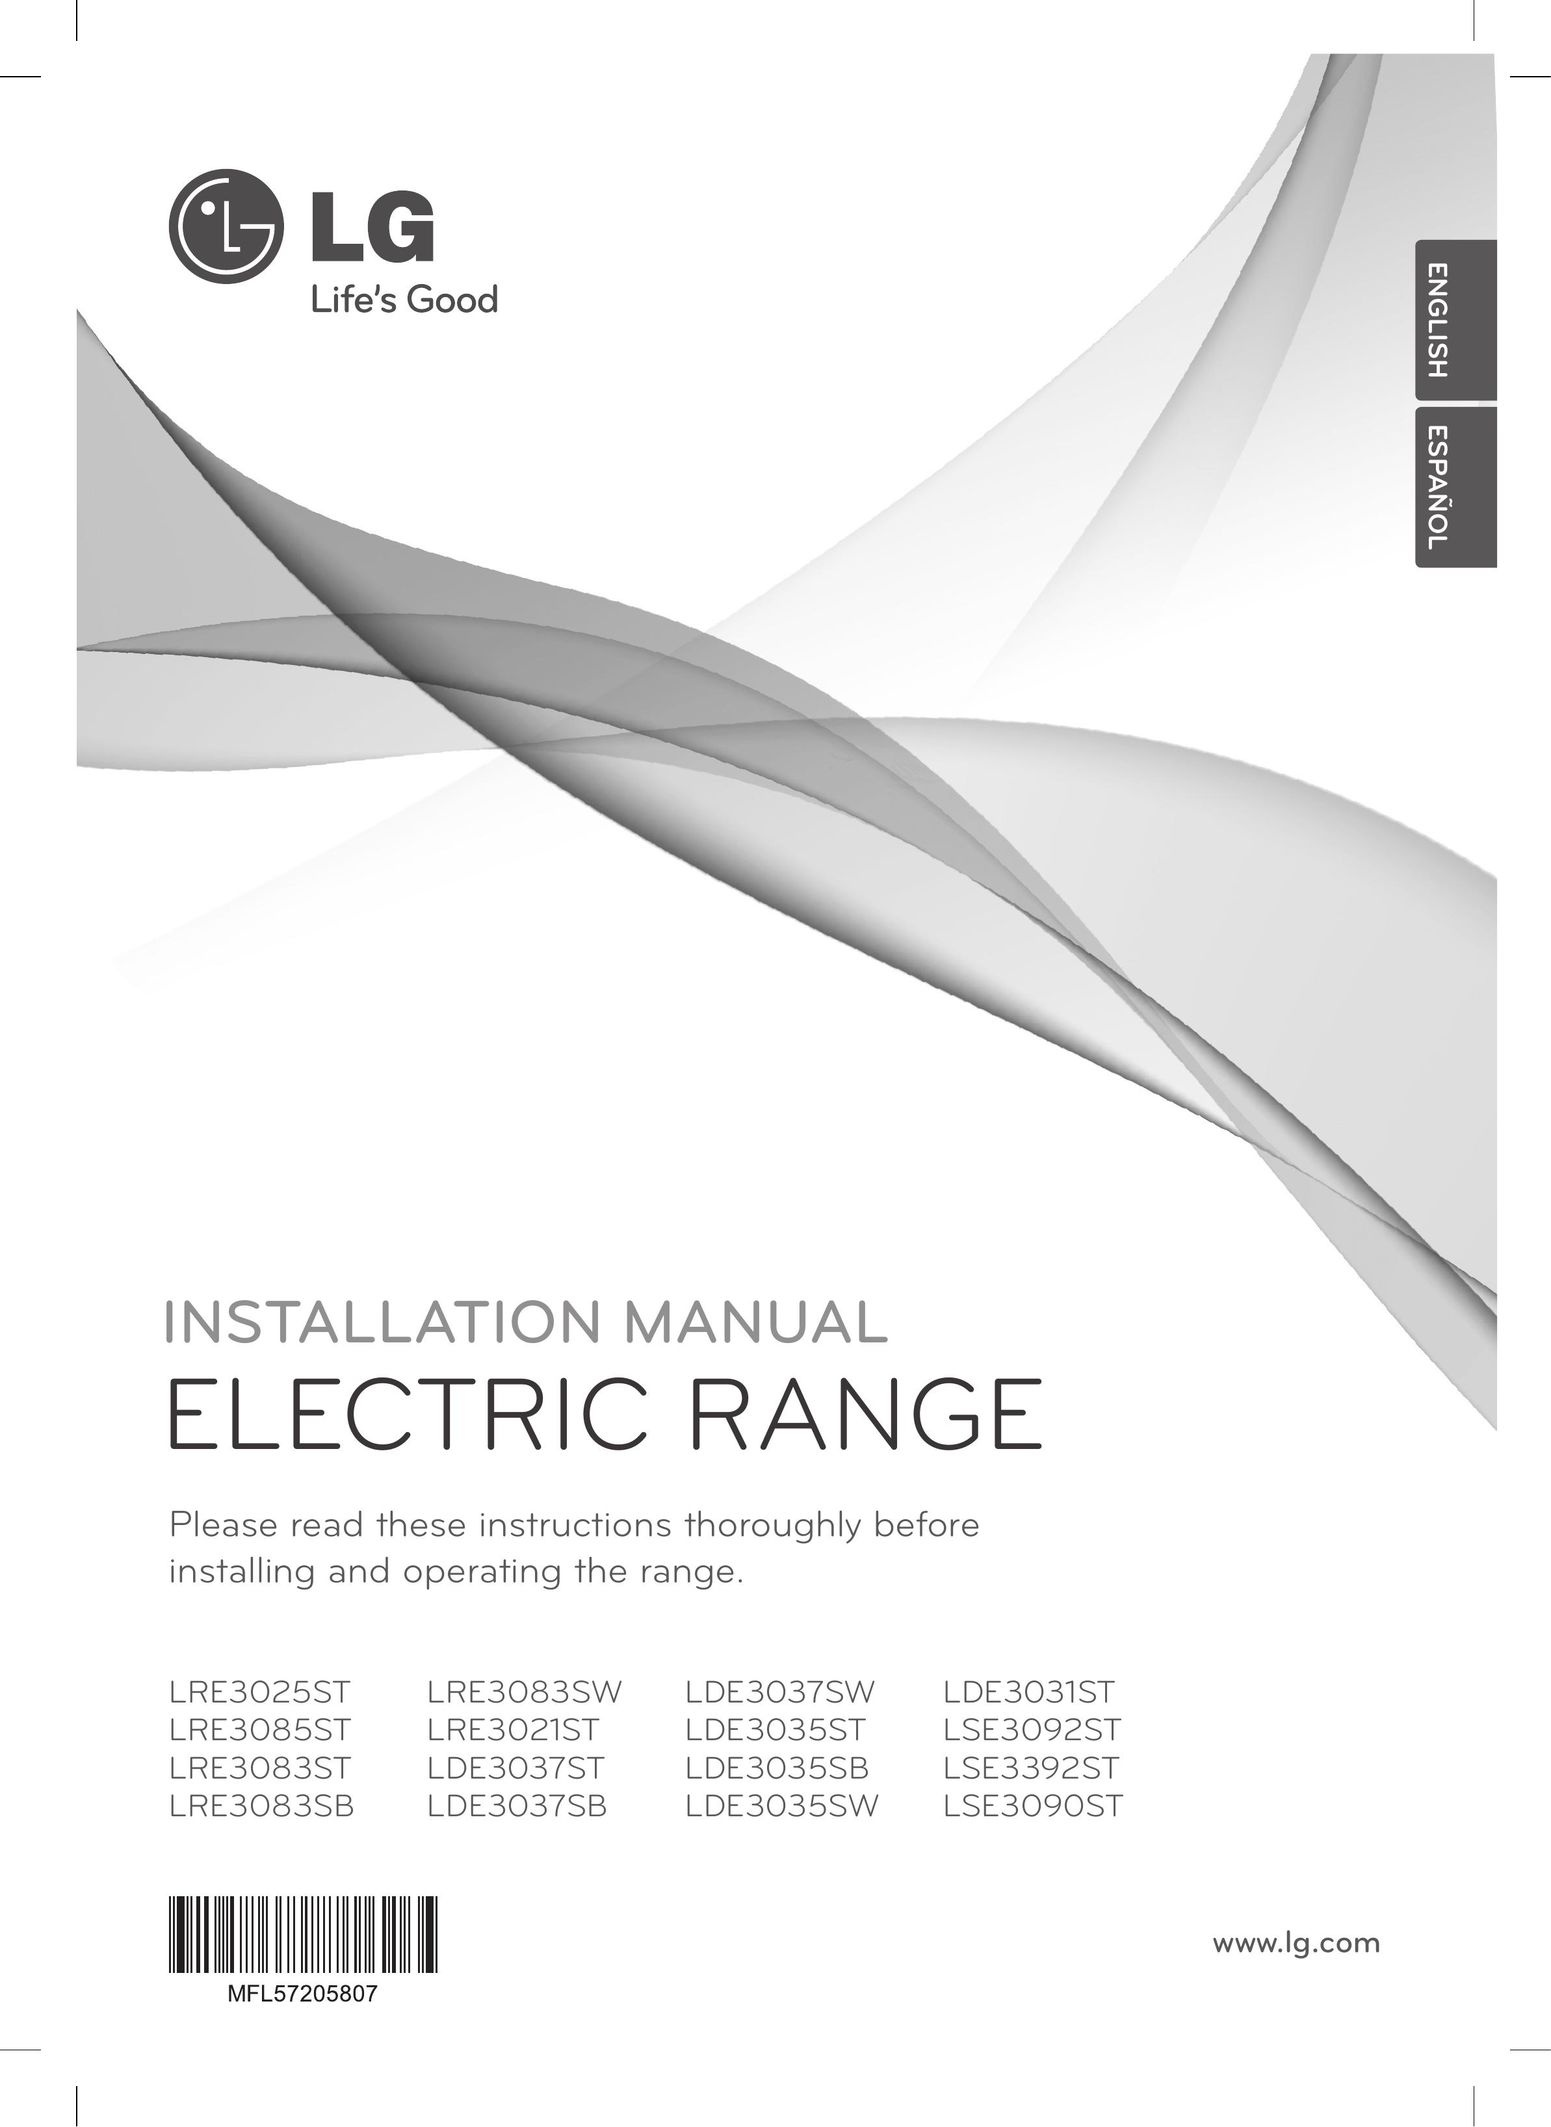 LG Electronics LDE3035SW Range User Manual